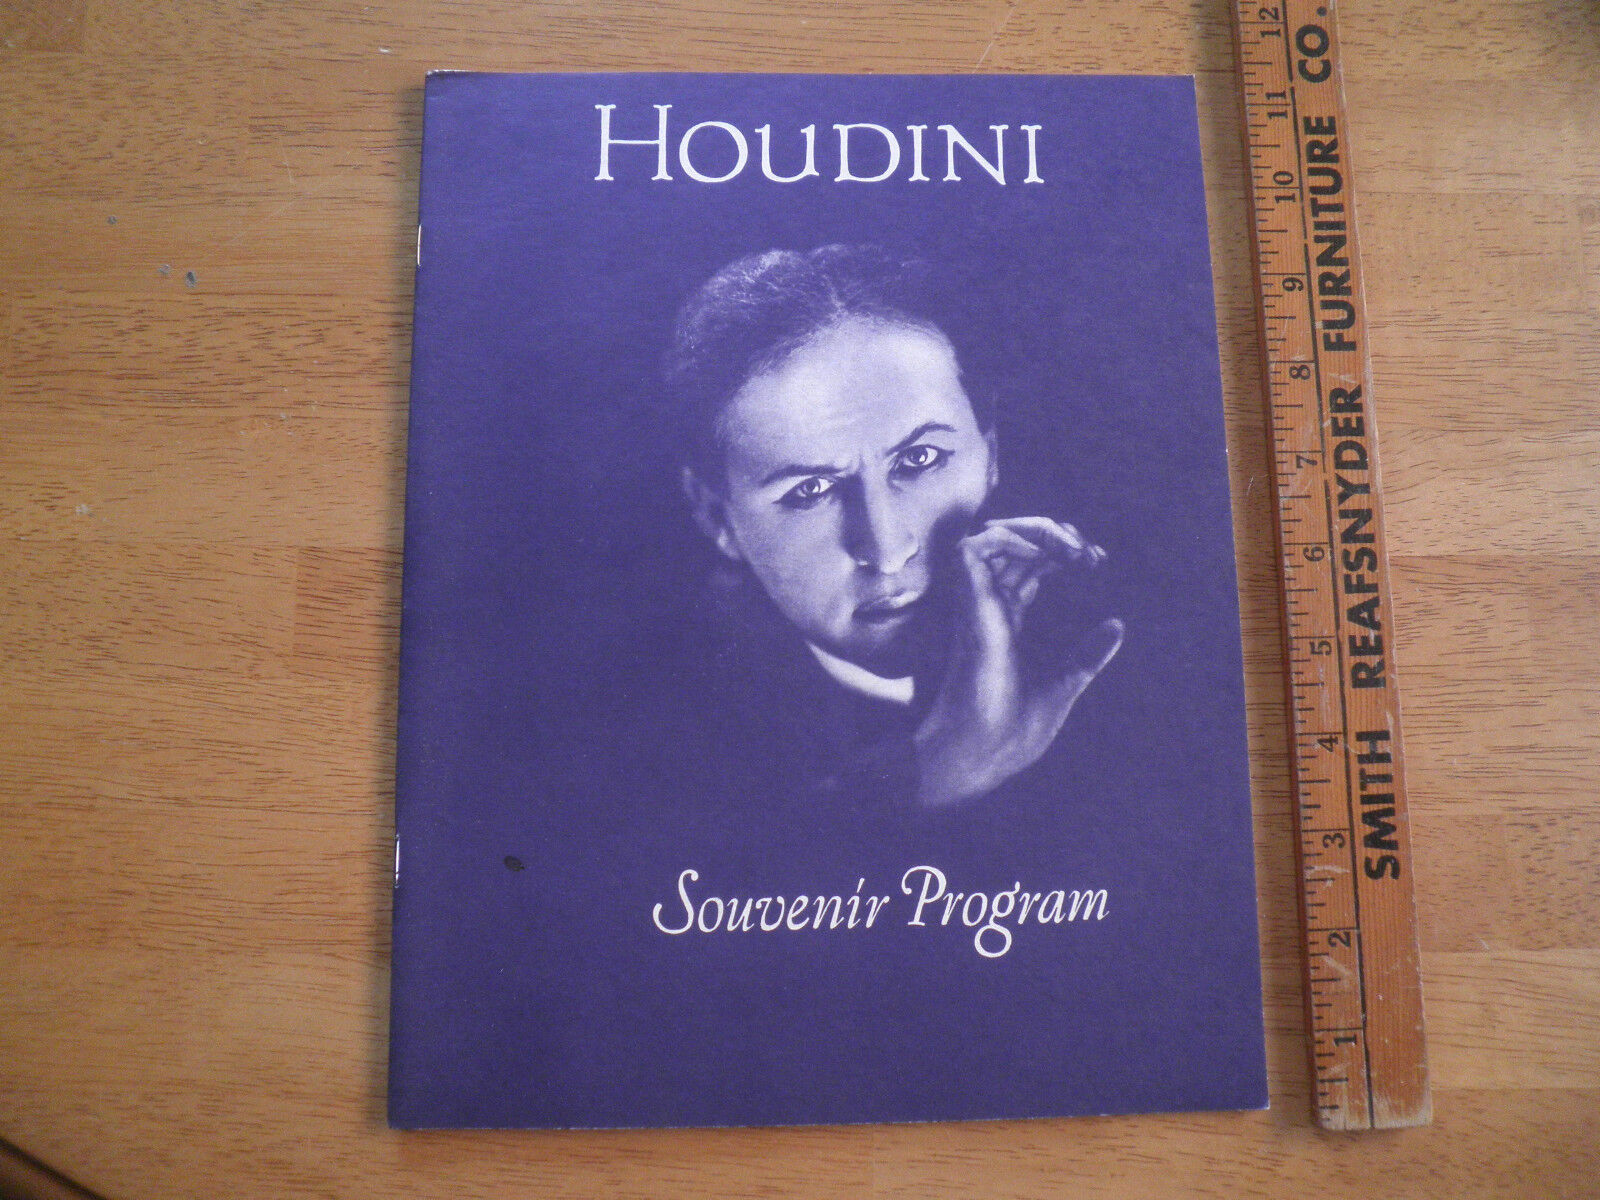 Houdini souvenir program 1979 Jacobs Antique Jewels series reprints HTF Magician